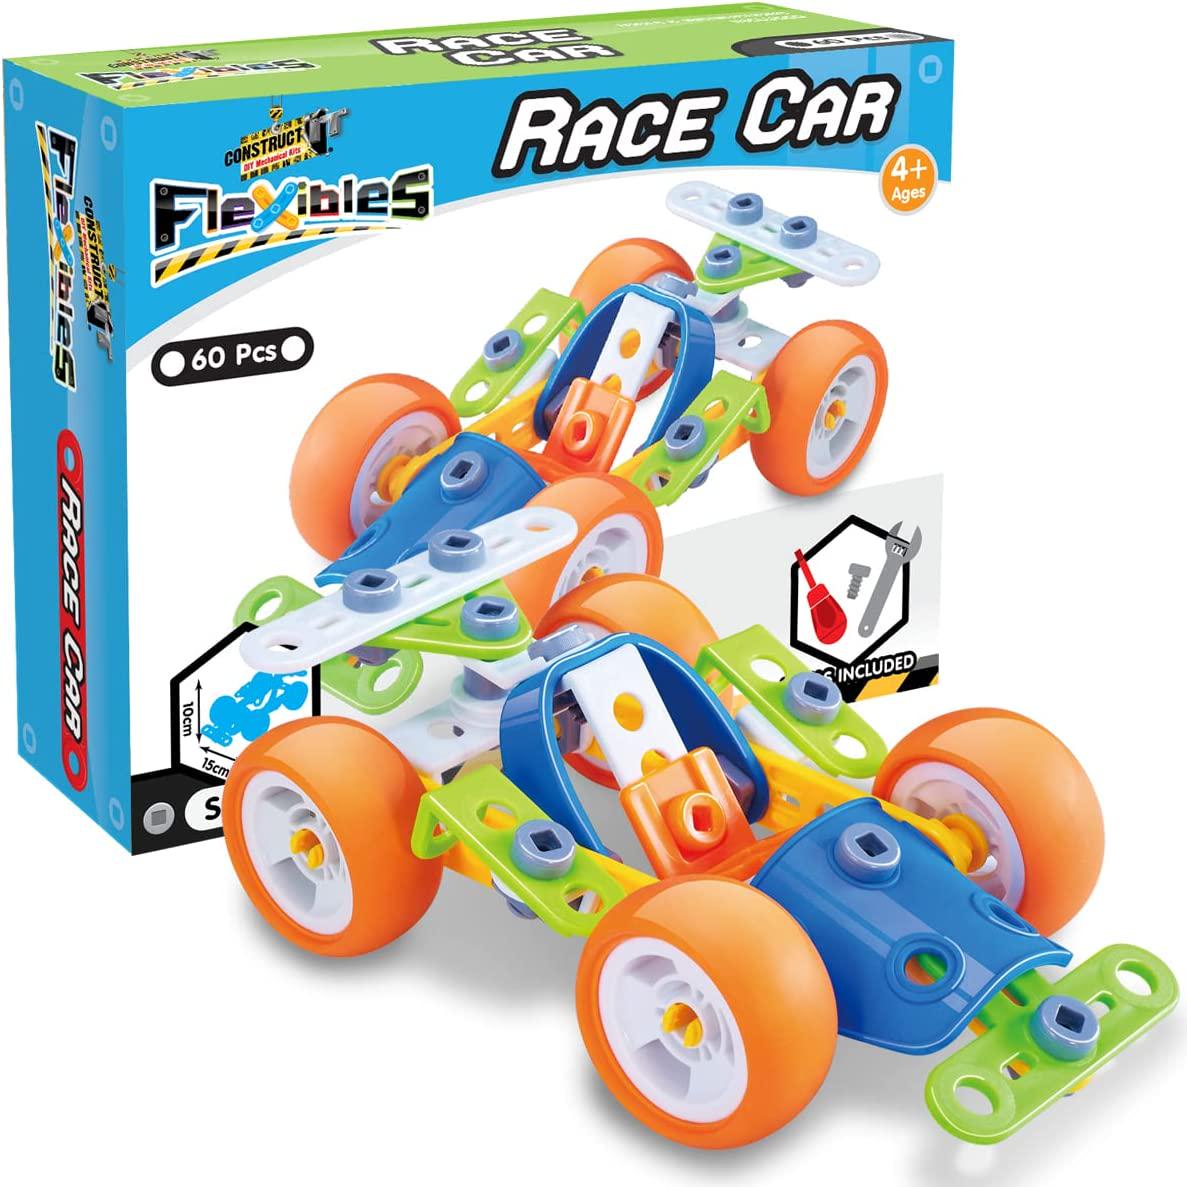 Construct-It, Flexibles - Race Car